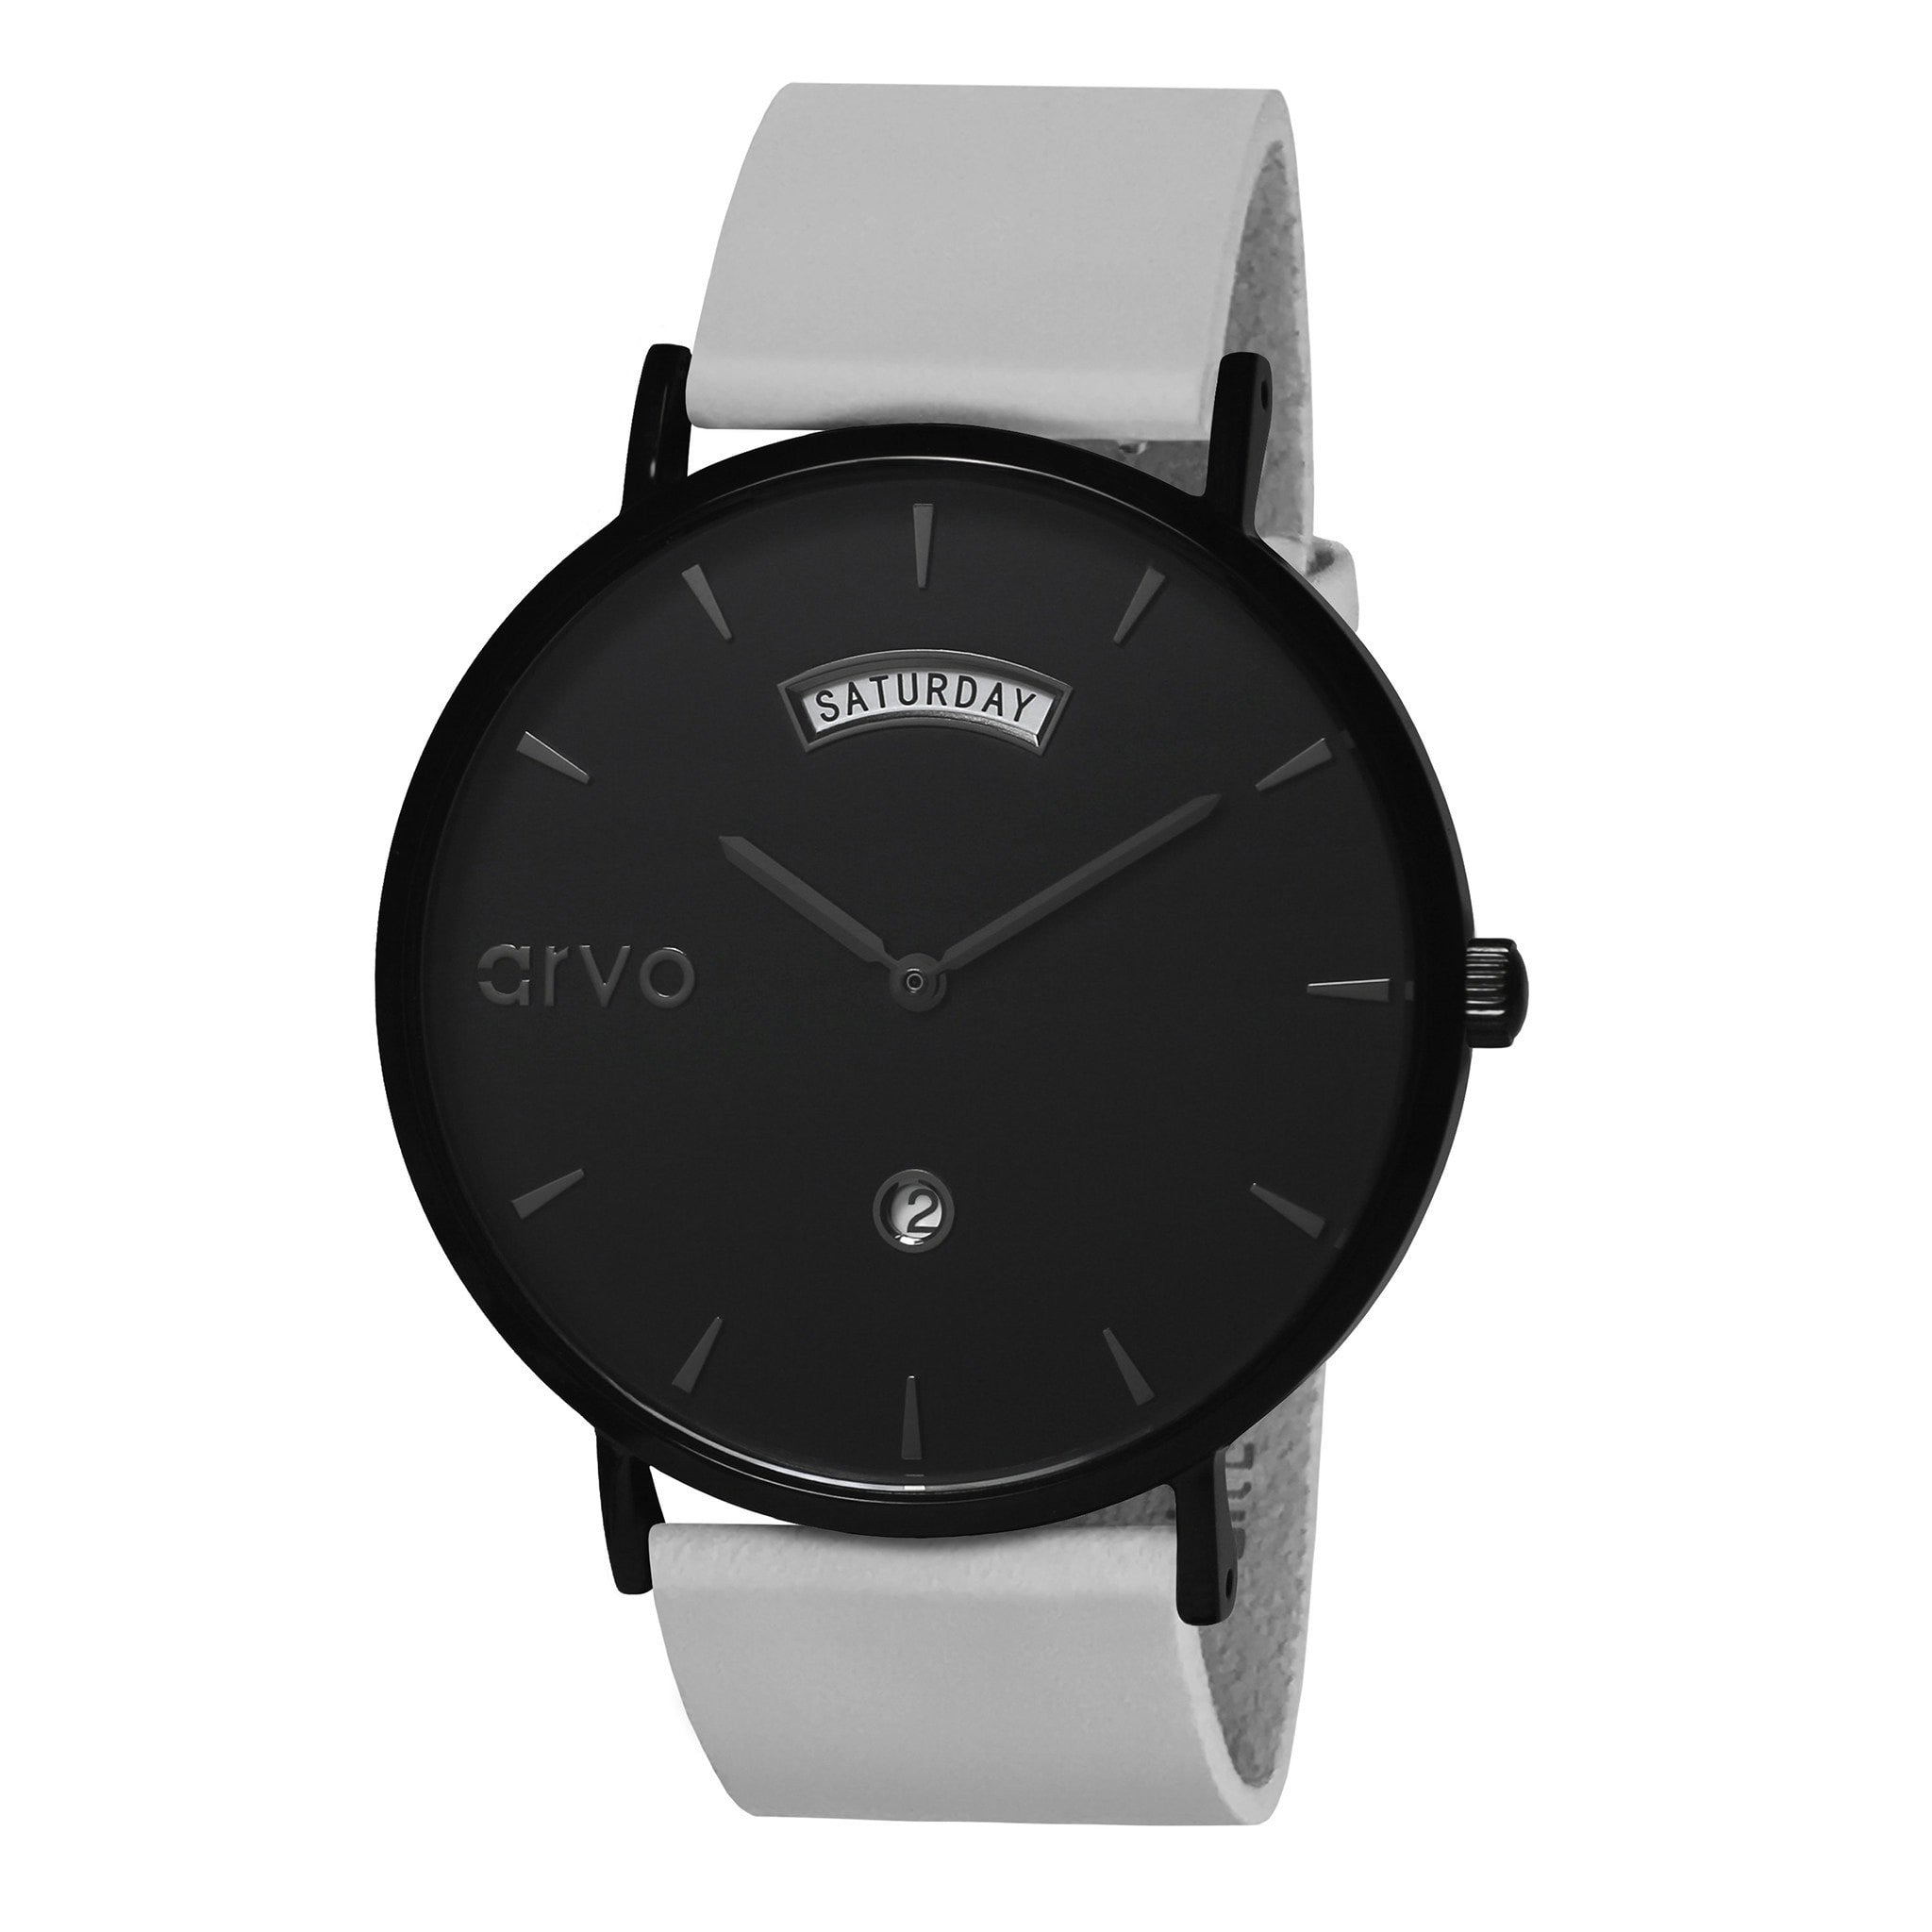 Arvo Black Awristacrat Watch - Gray Leather